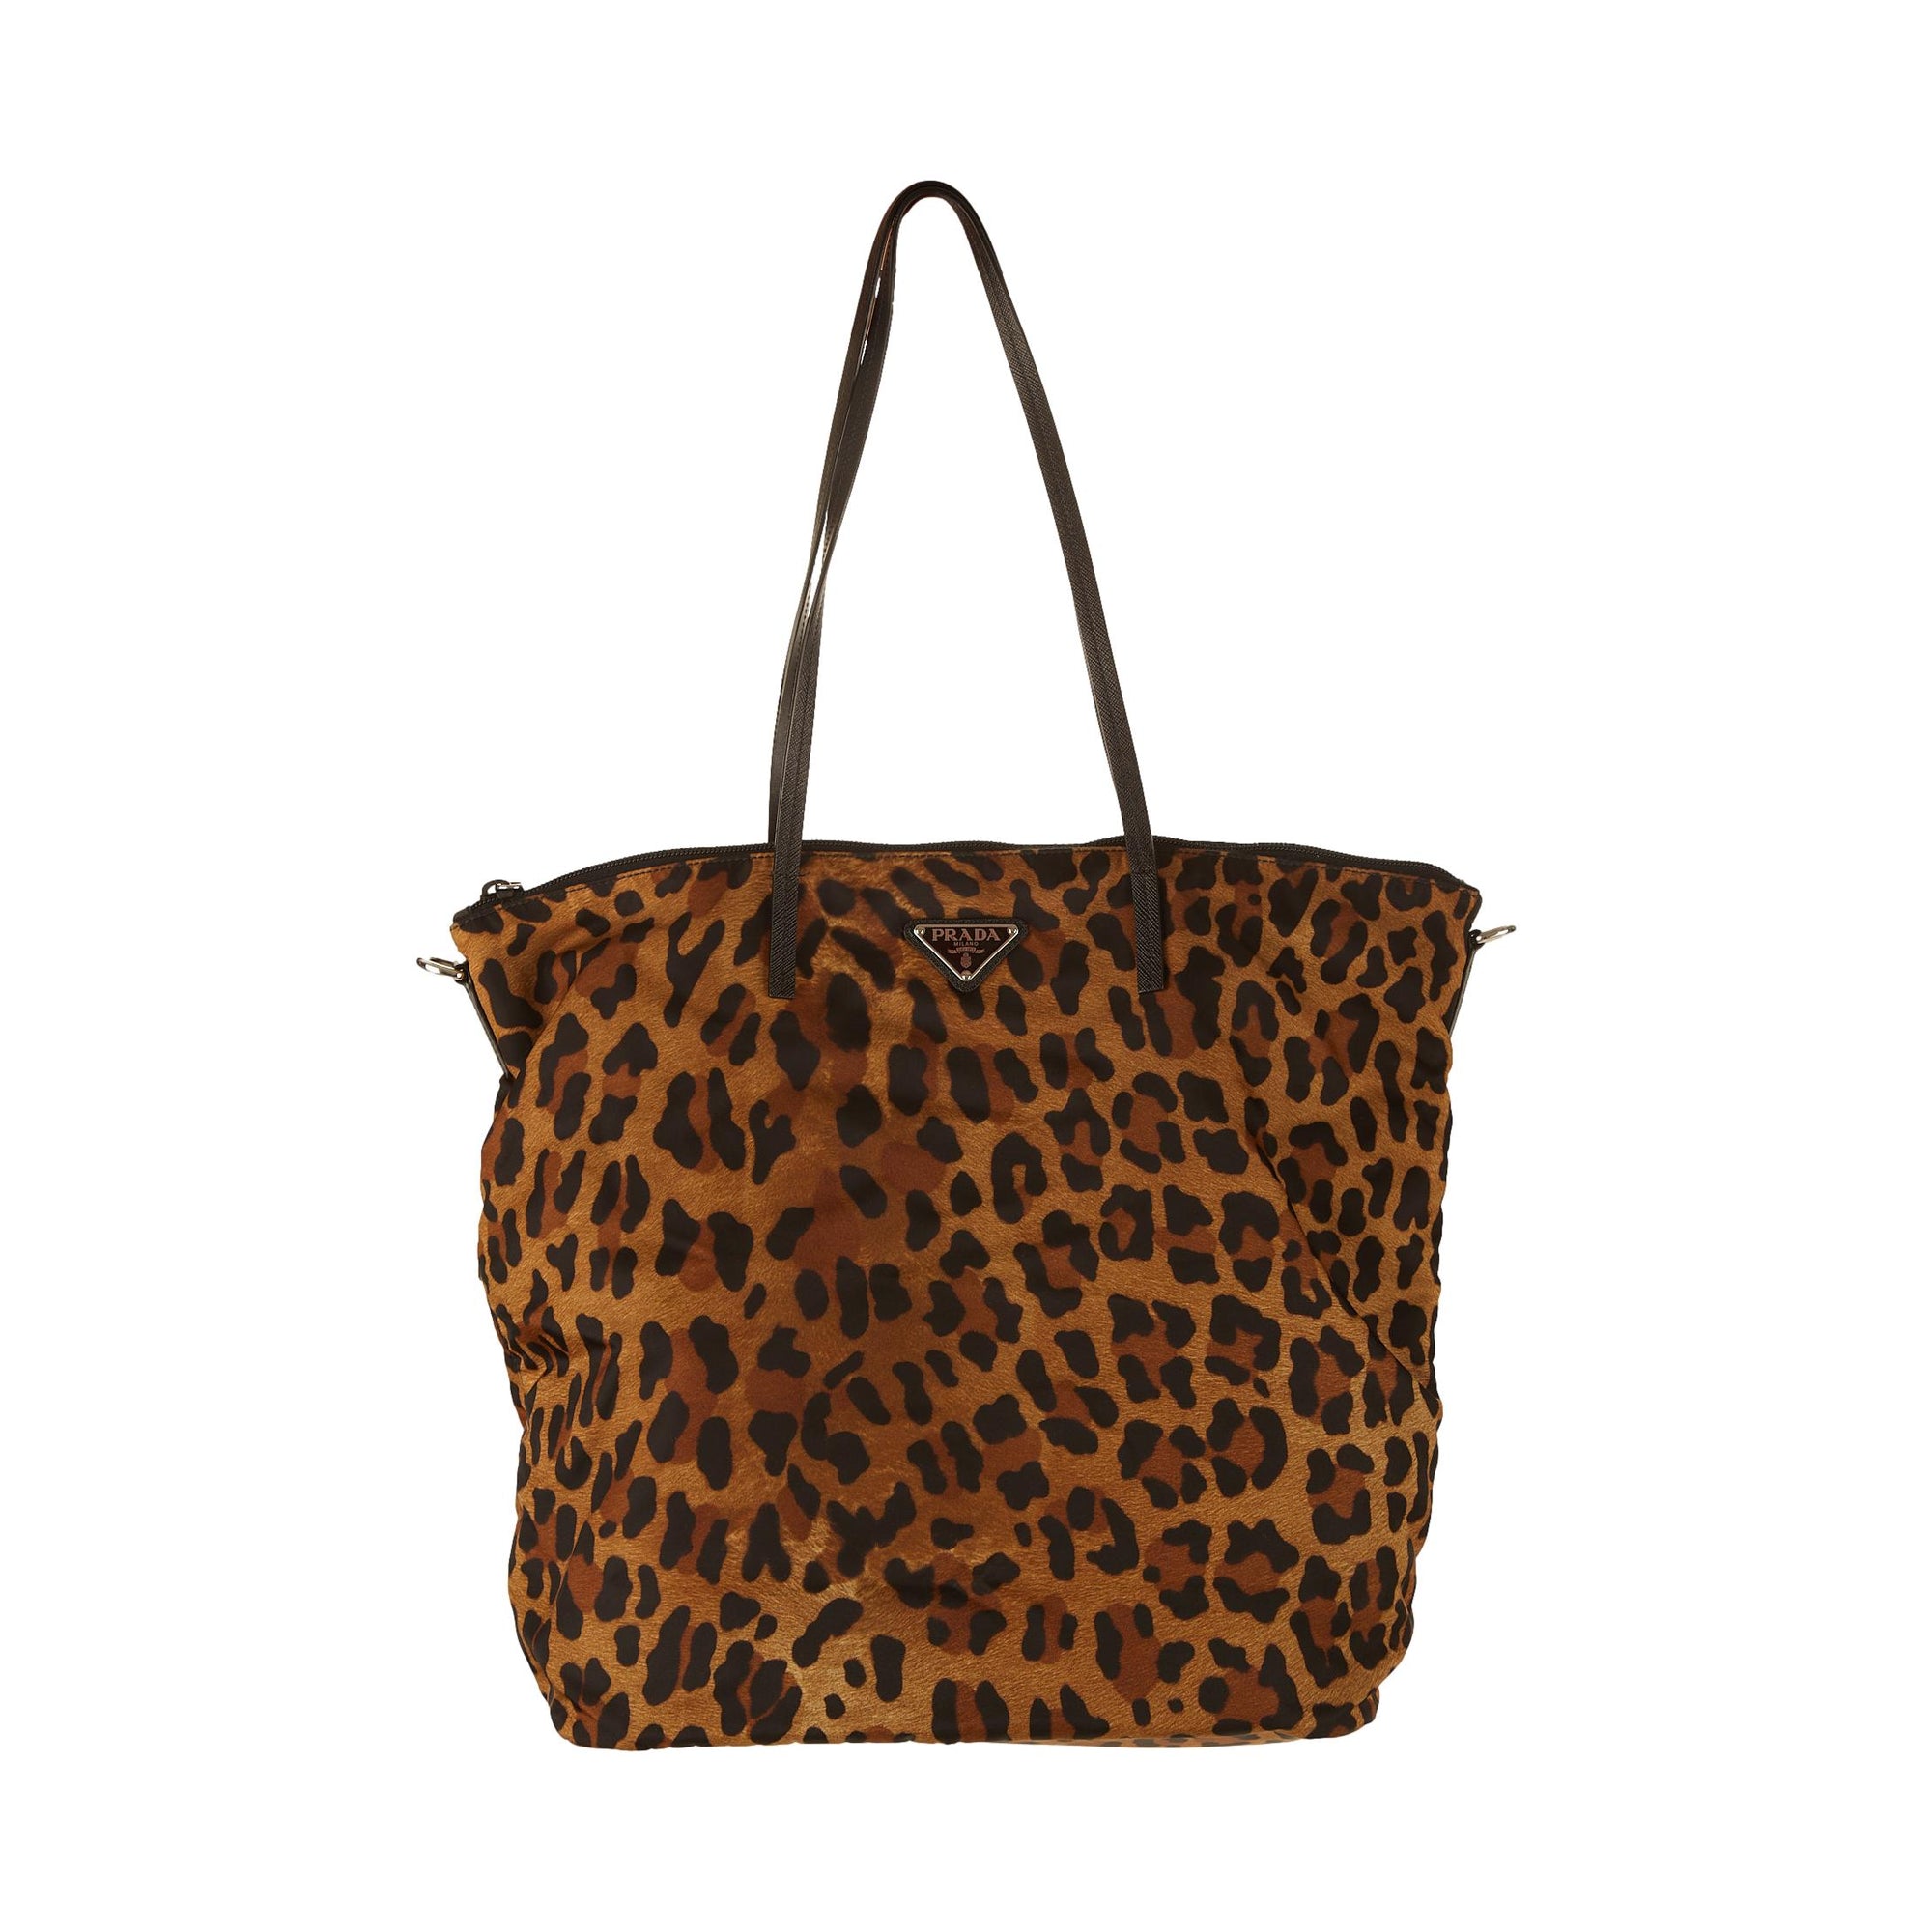 Prada Leopard Print Nylon 2Way Bag